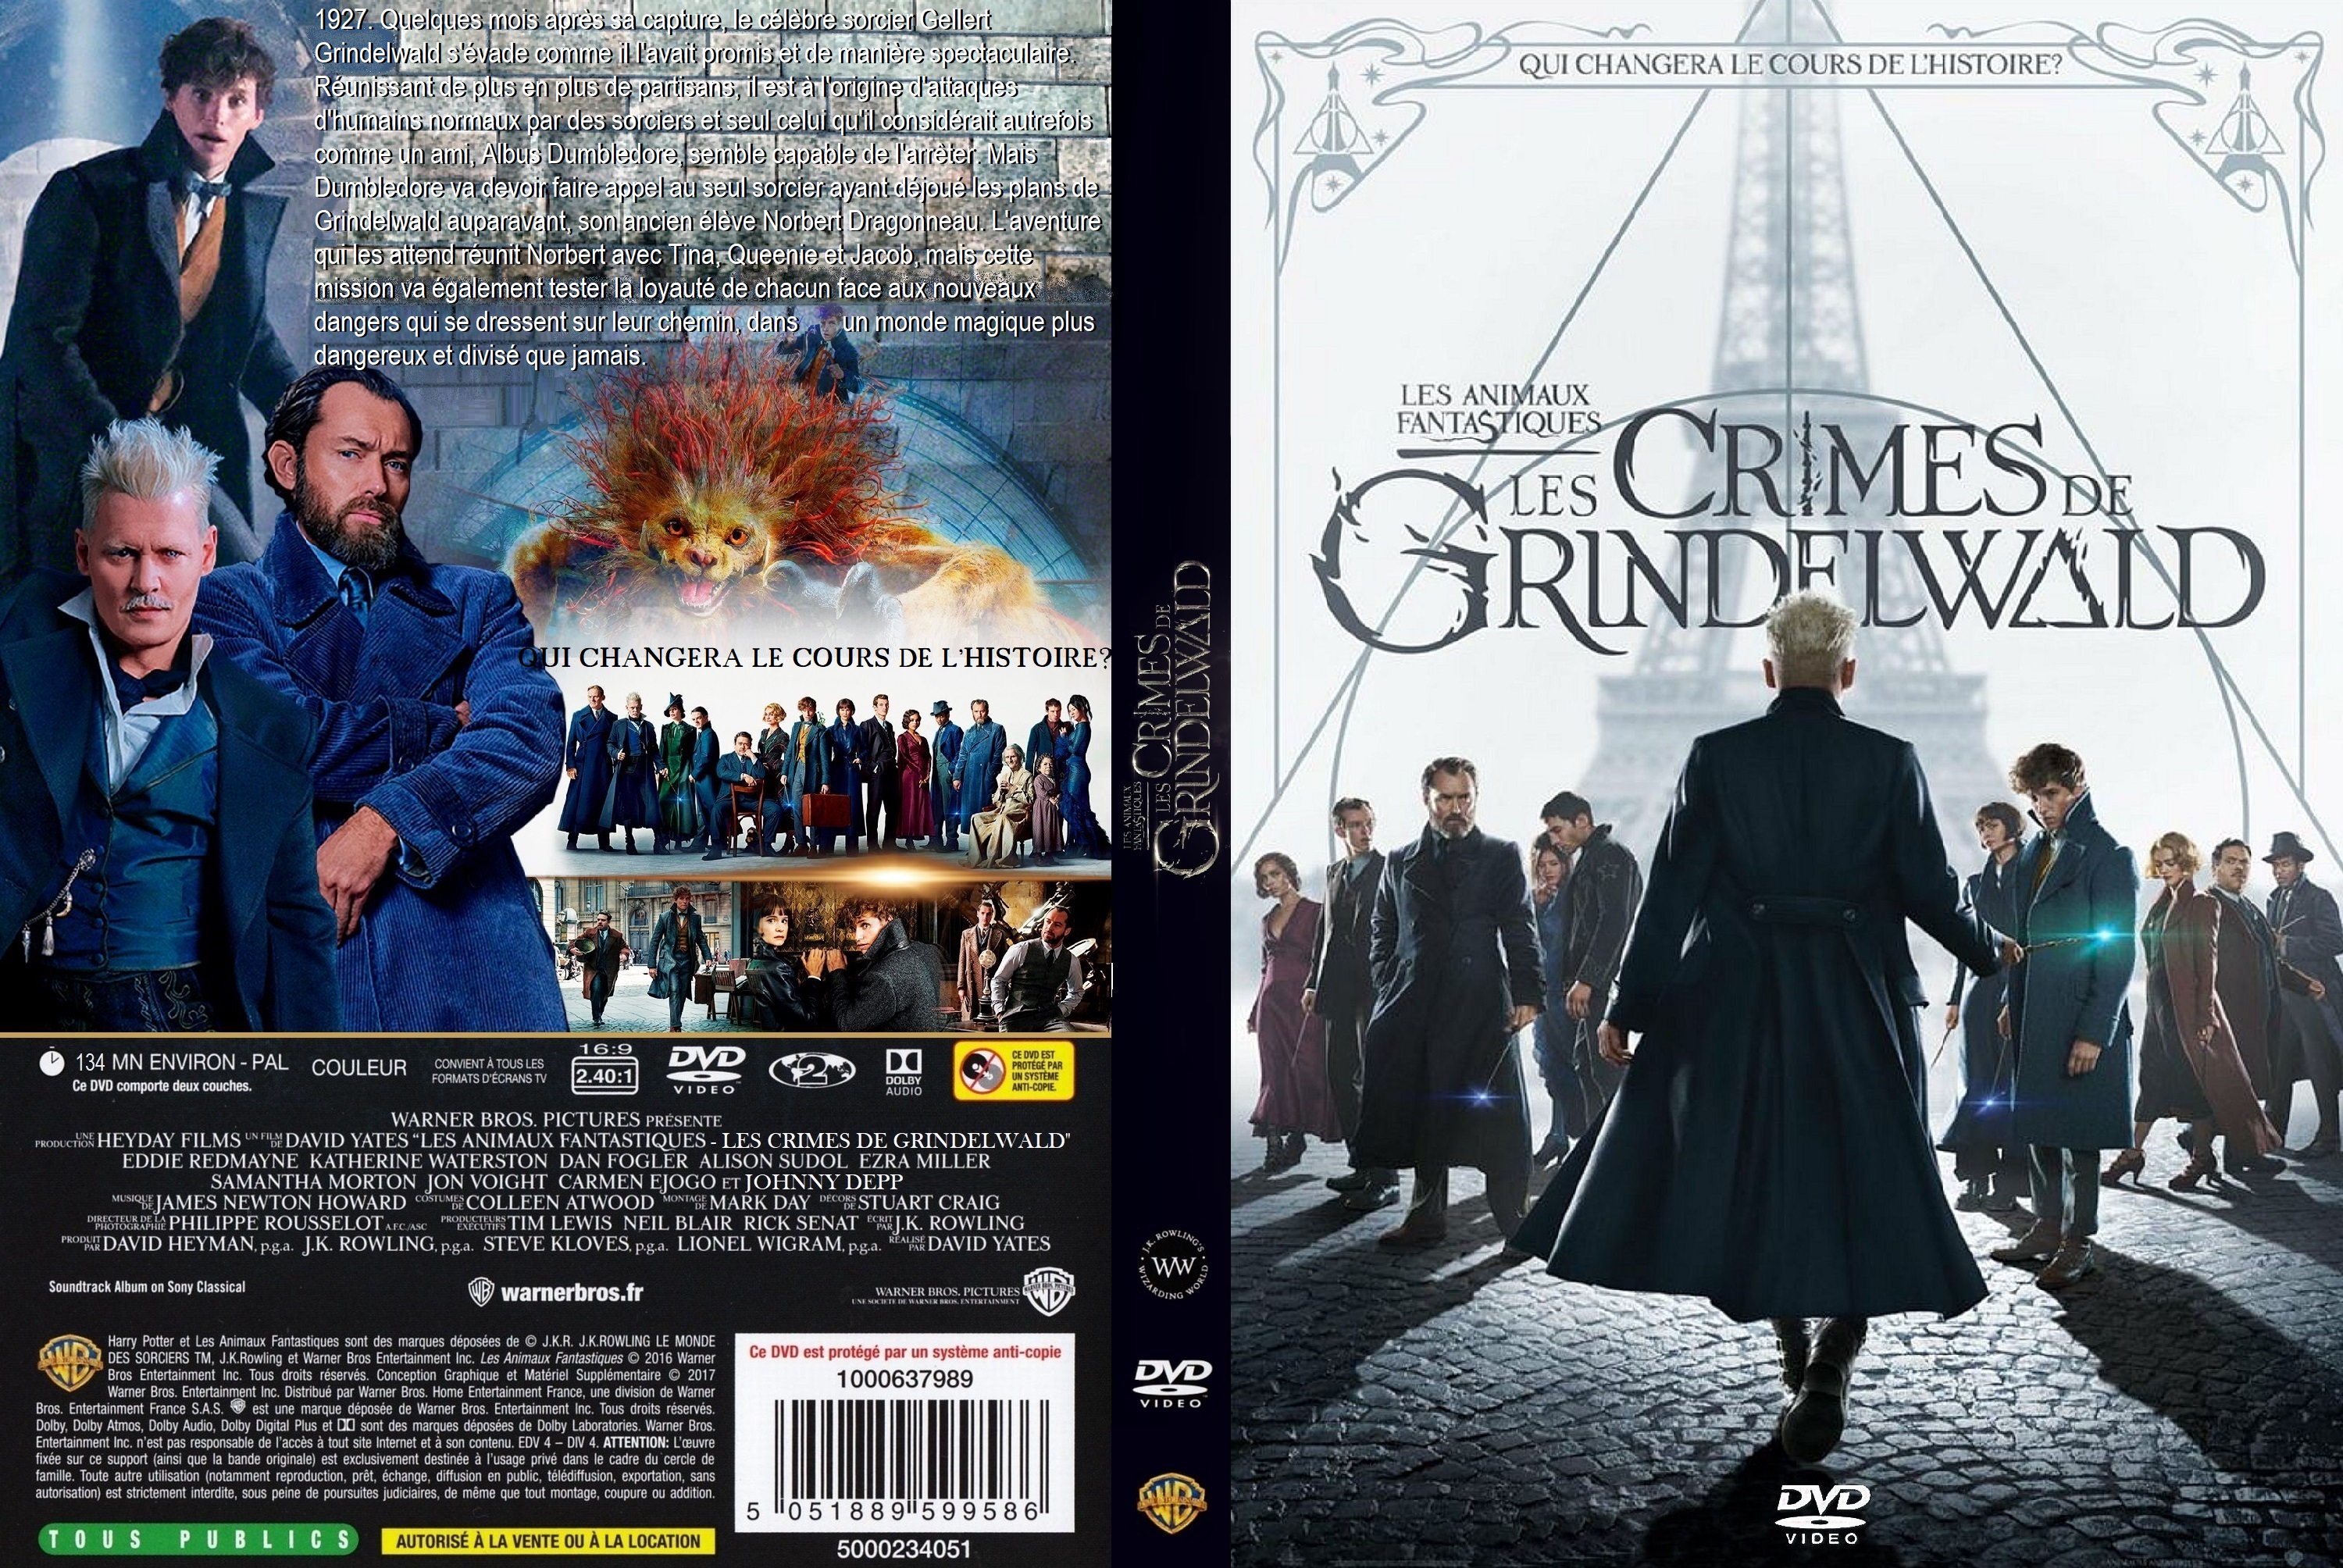 Jaquette DVD Les animaux fantastiques Les crimes de Grindelwald custom v2